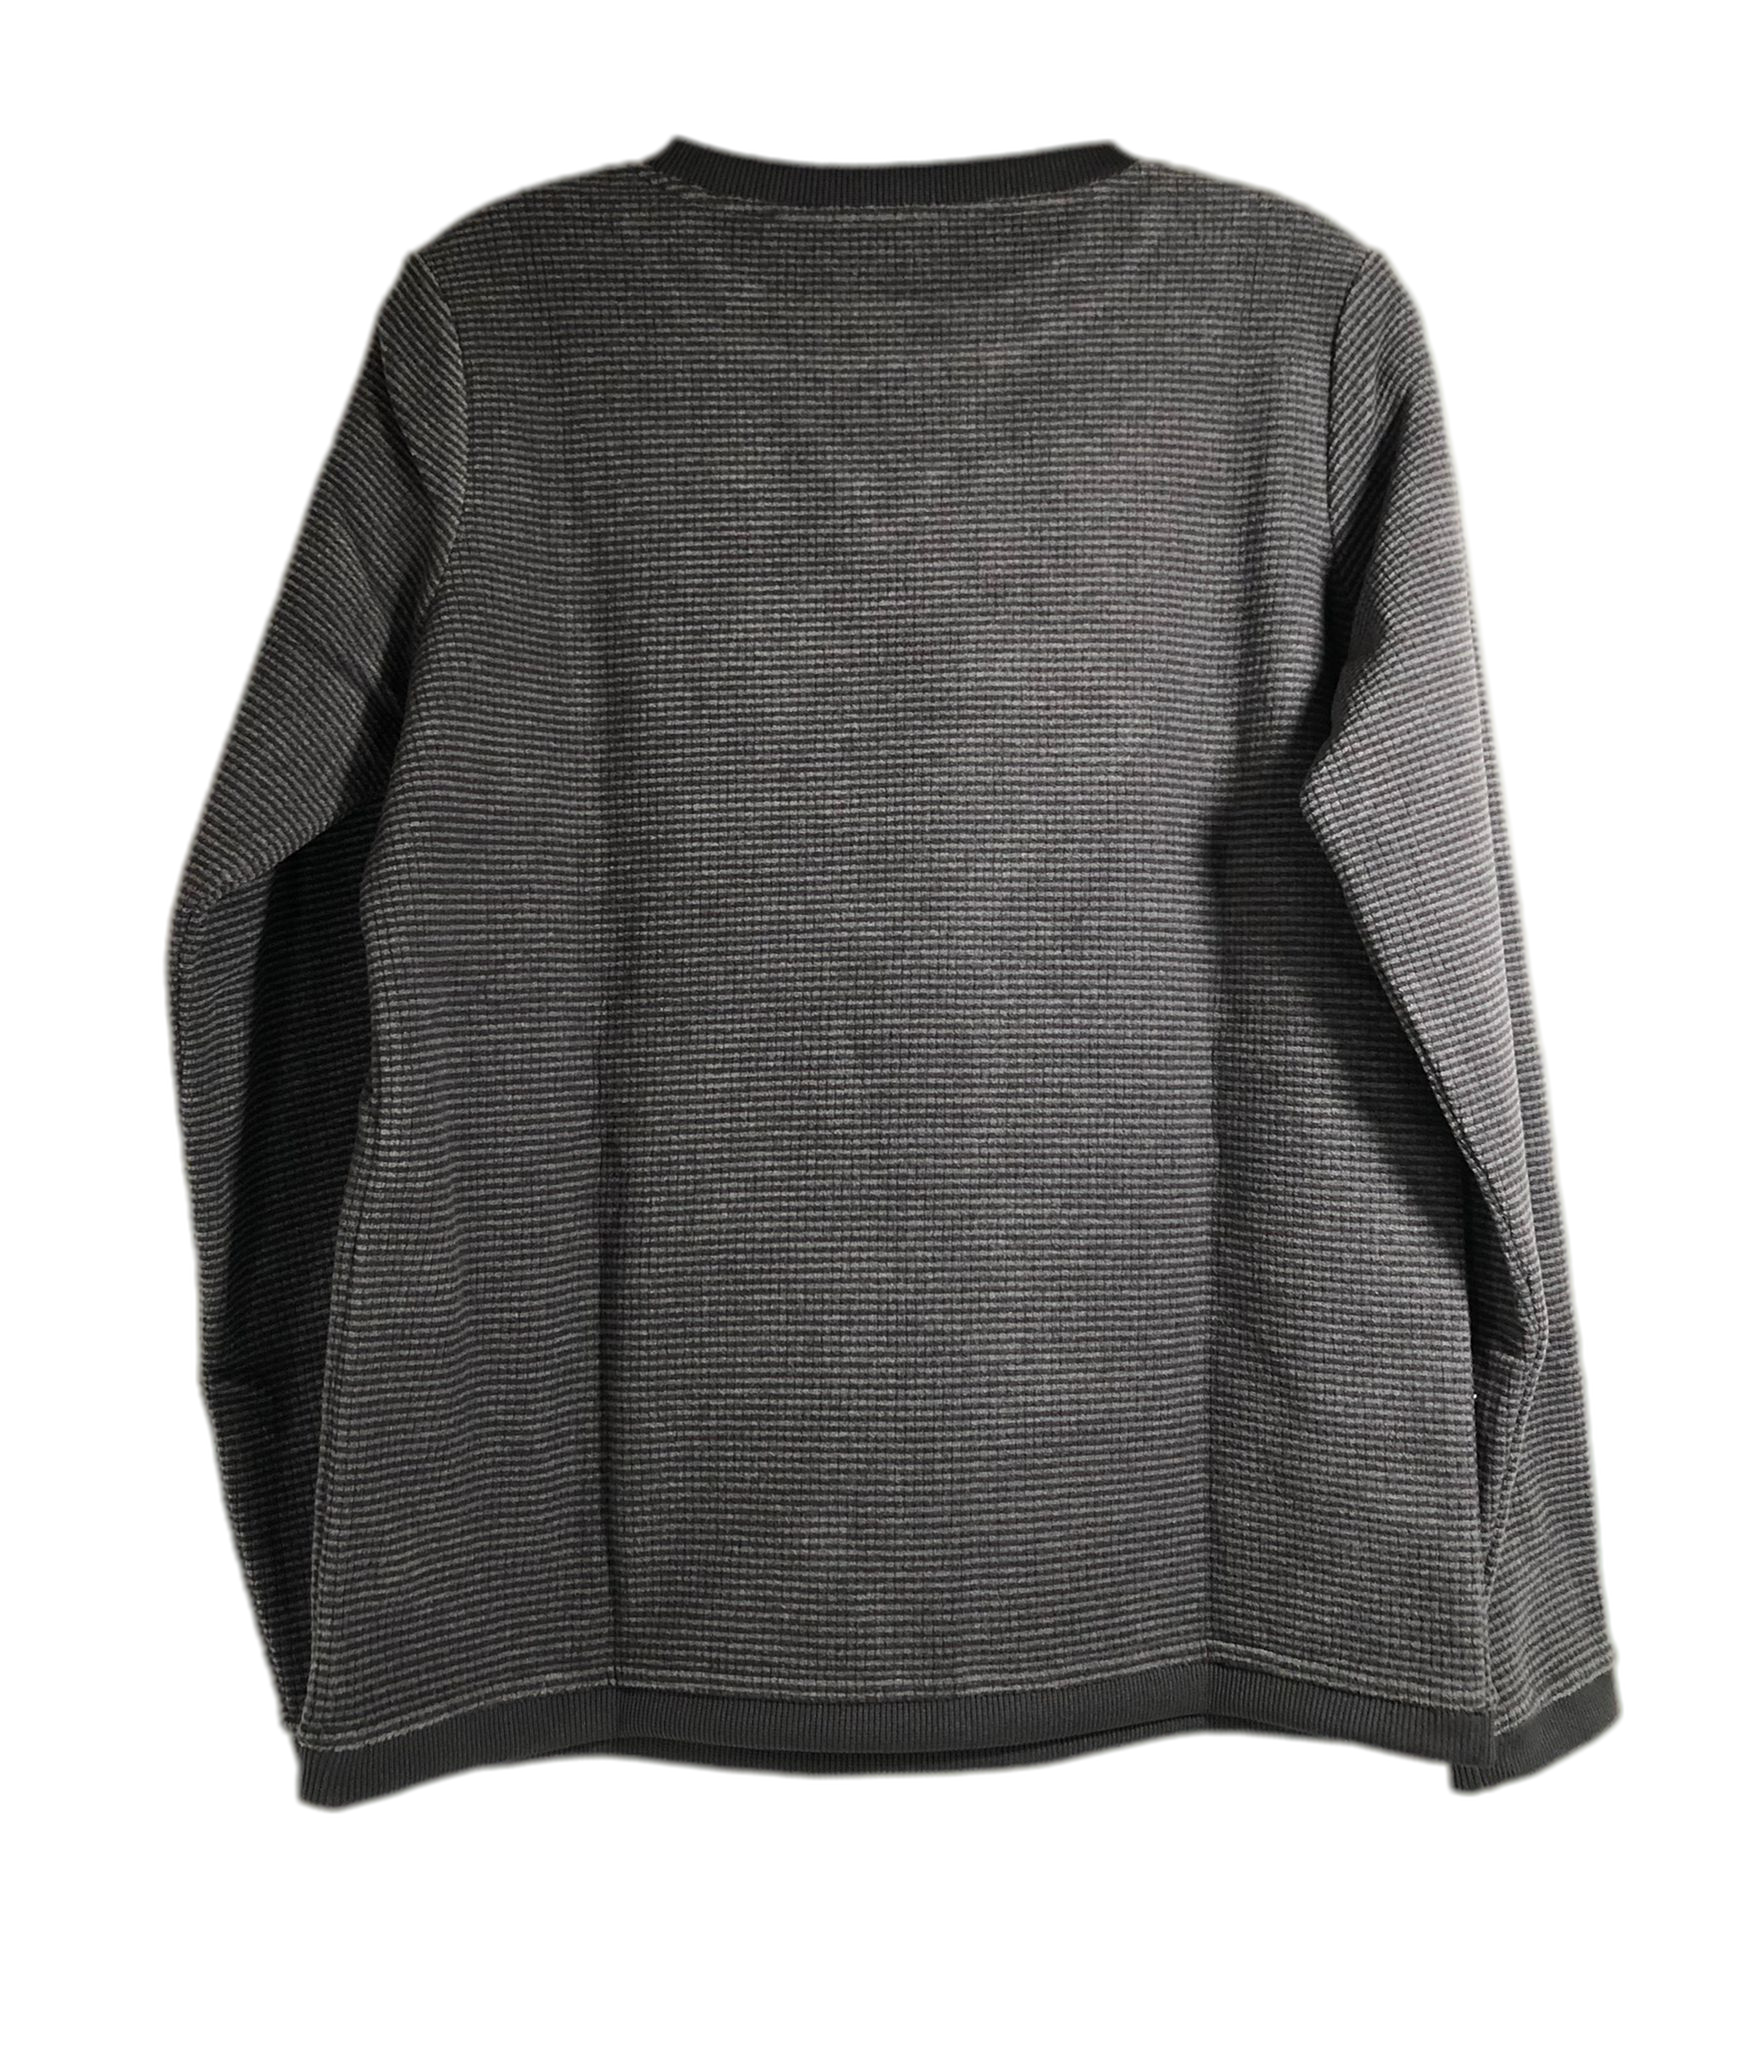 Denim & Co. Chenille Fleece Long-Sleeve Sweatshirt